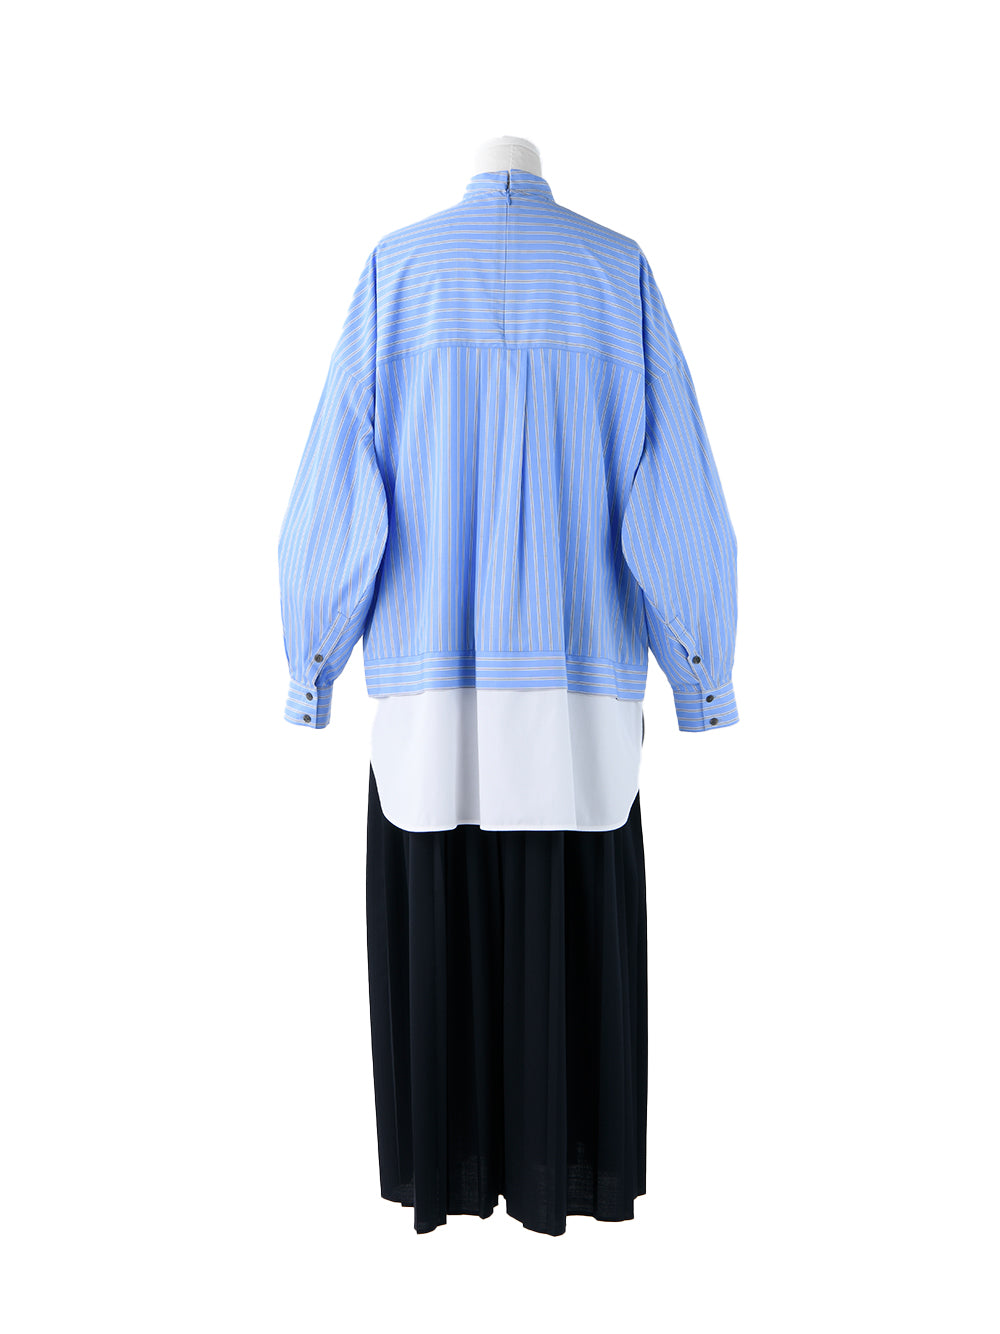 Pleated Layered Dress (Medium Blue)